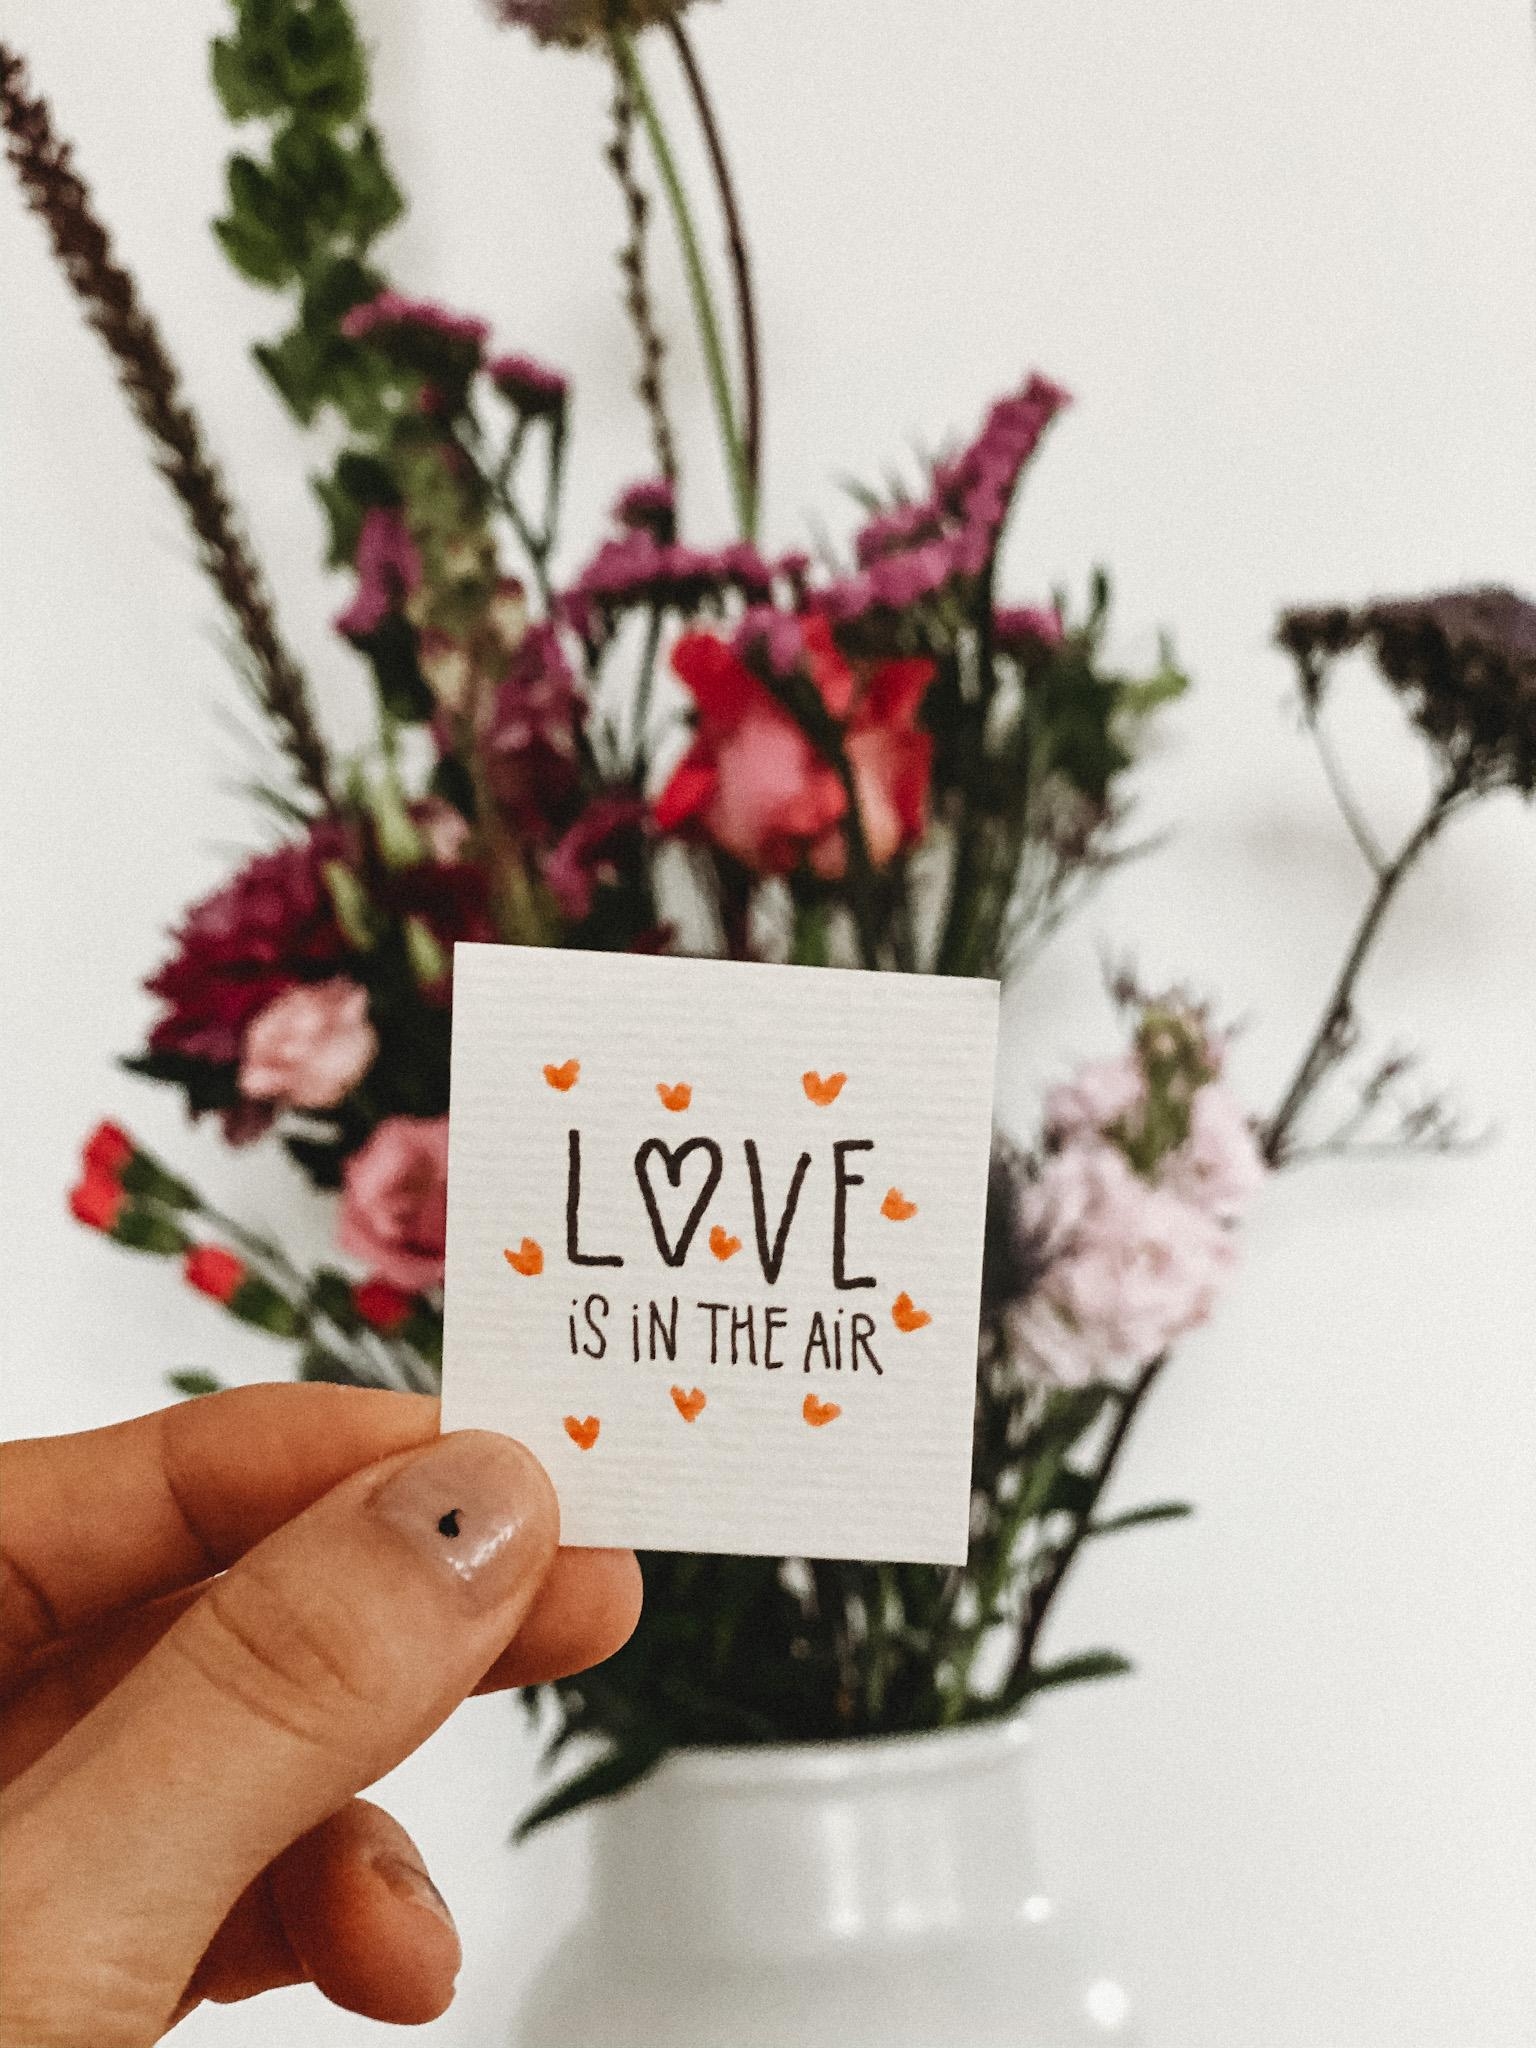 spread some love to everyone 💕
#valentines #spreadlove #love #selflove #freshflowers